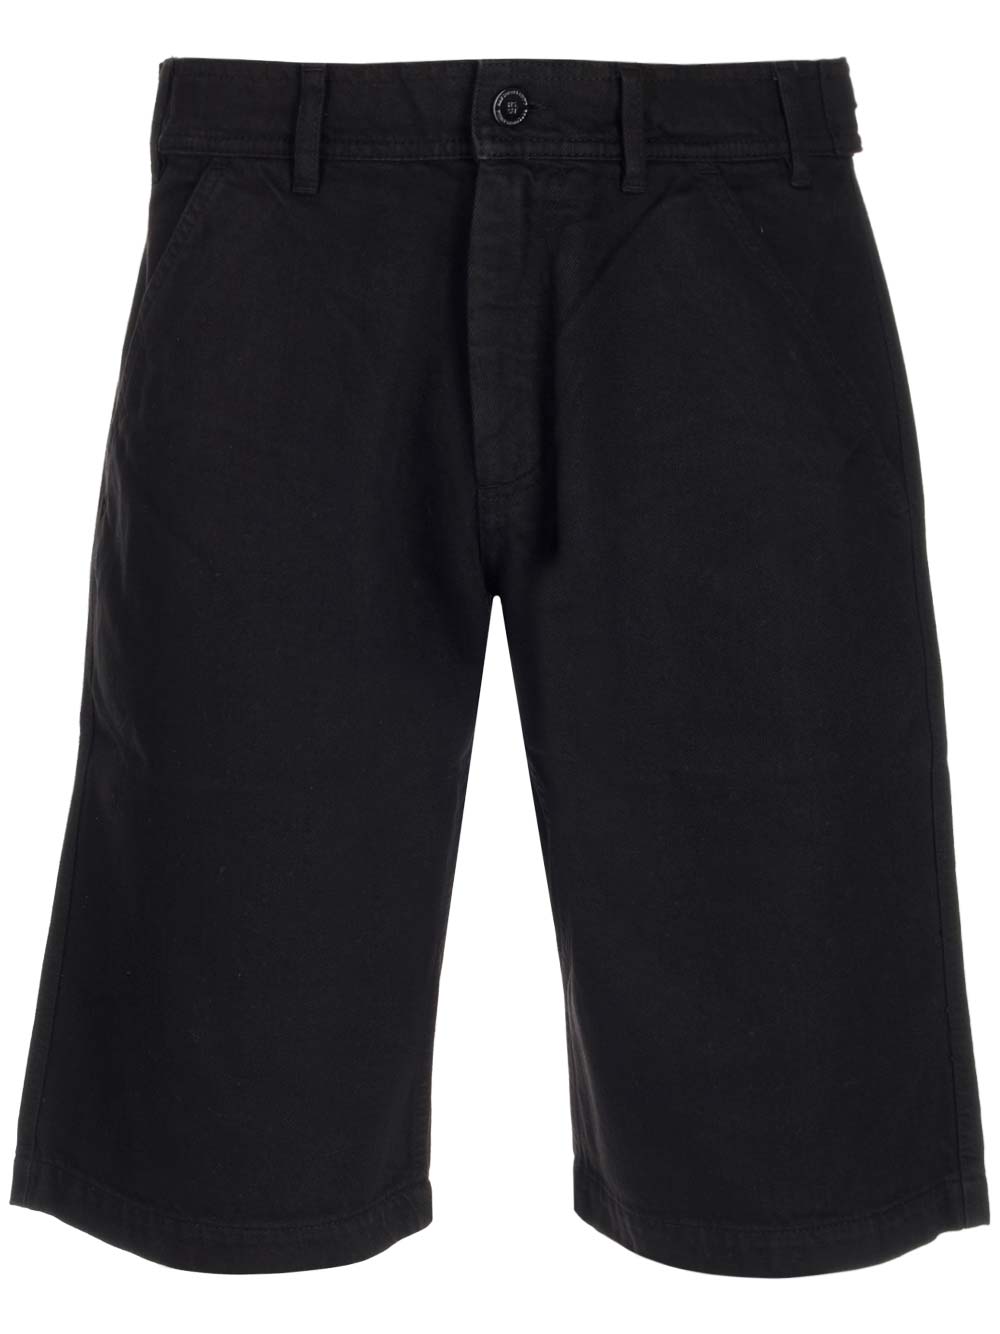 Black Bermuda Shorts With Application